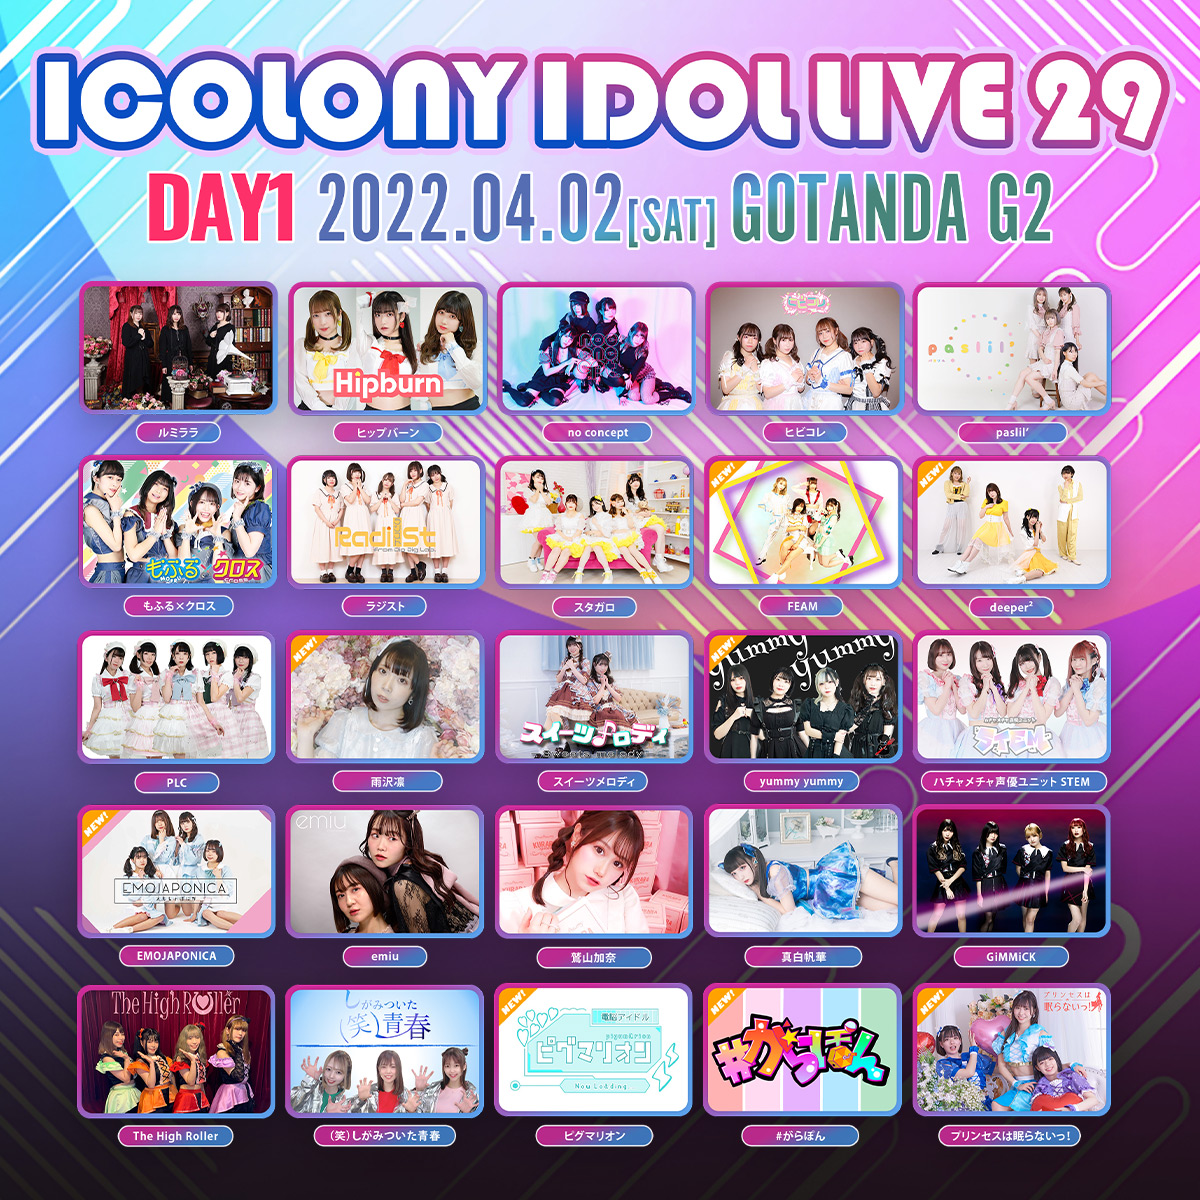 ICOLONY IDOL LIVE 29 // DAY1